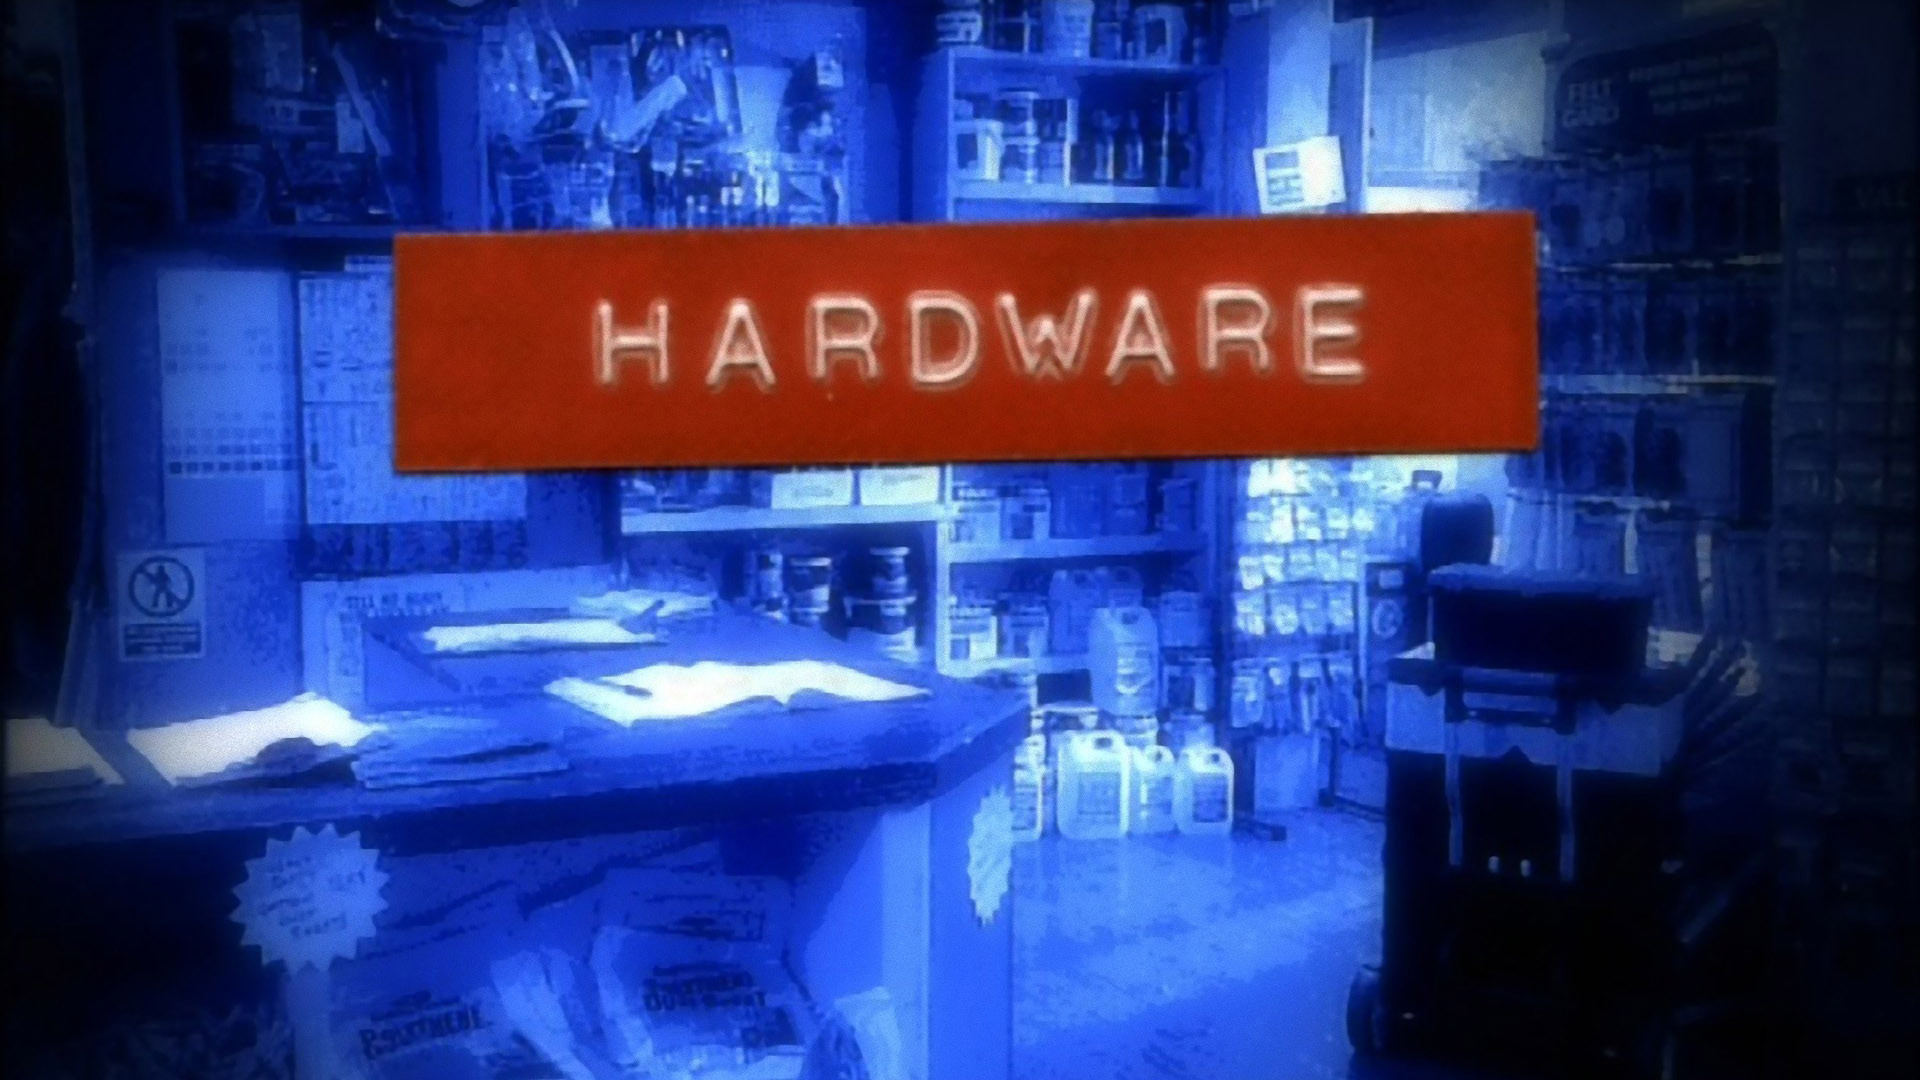 Show Hardware